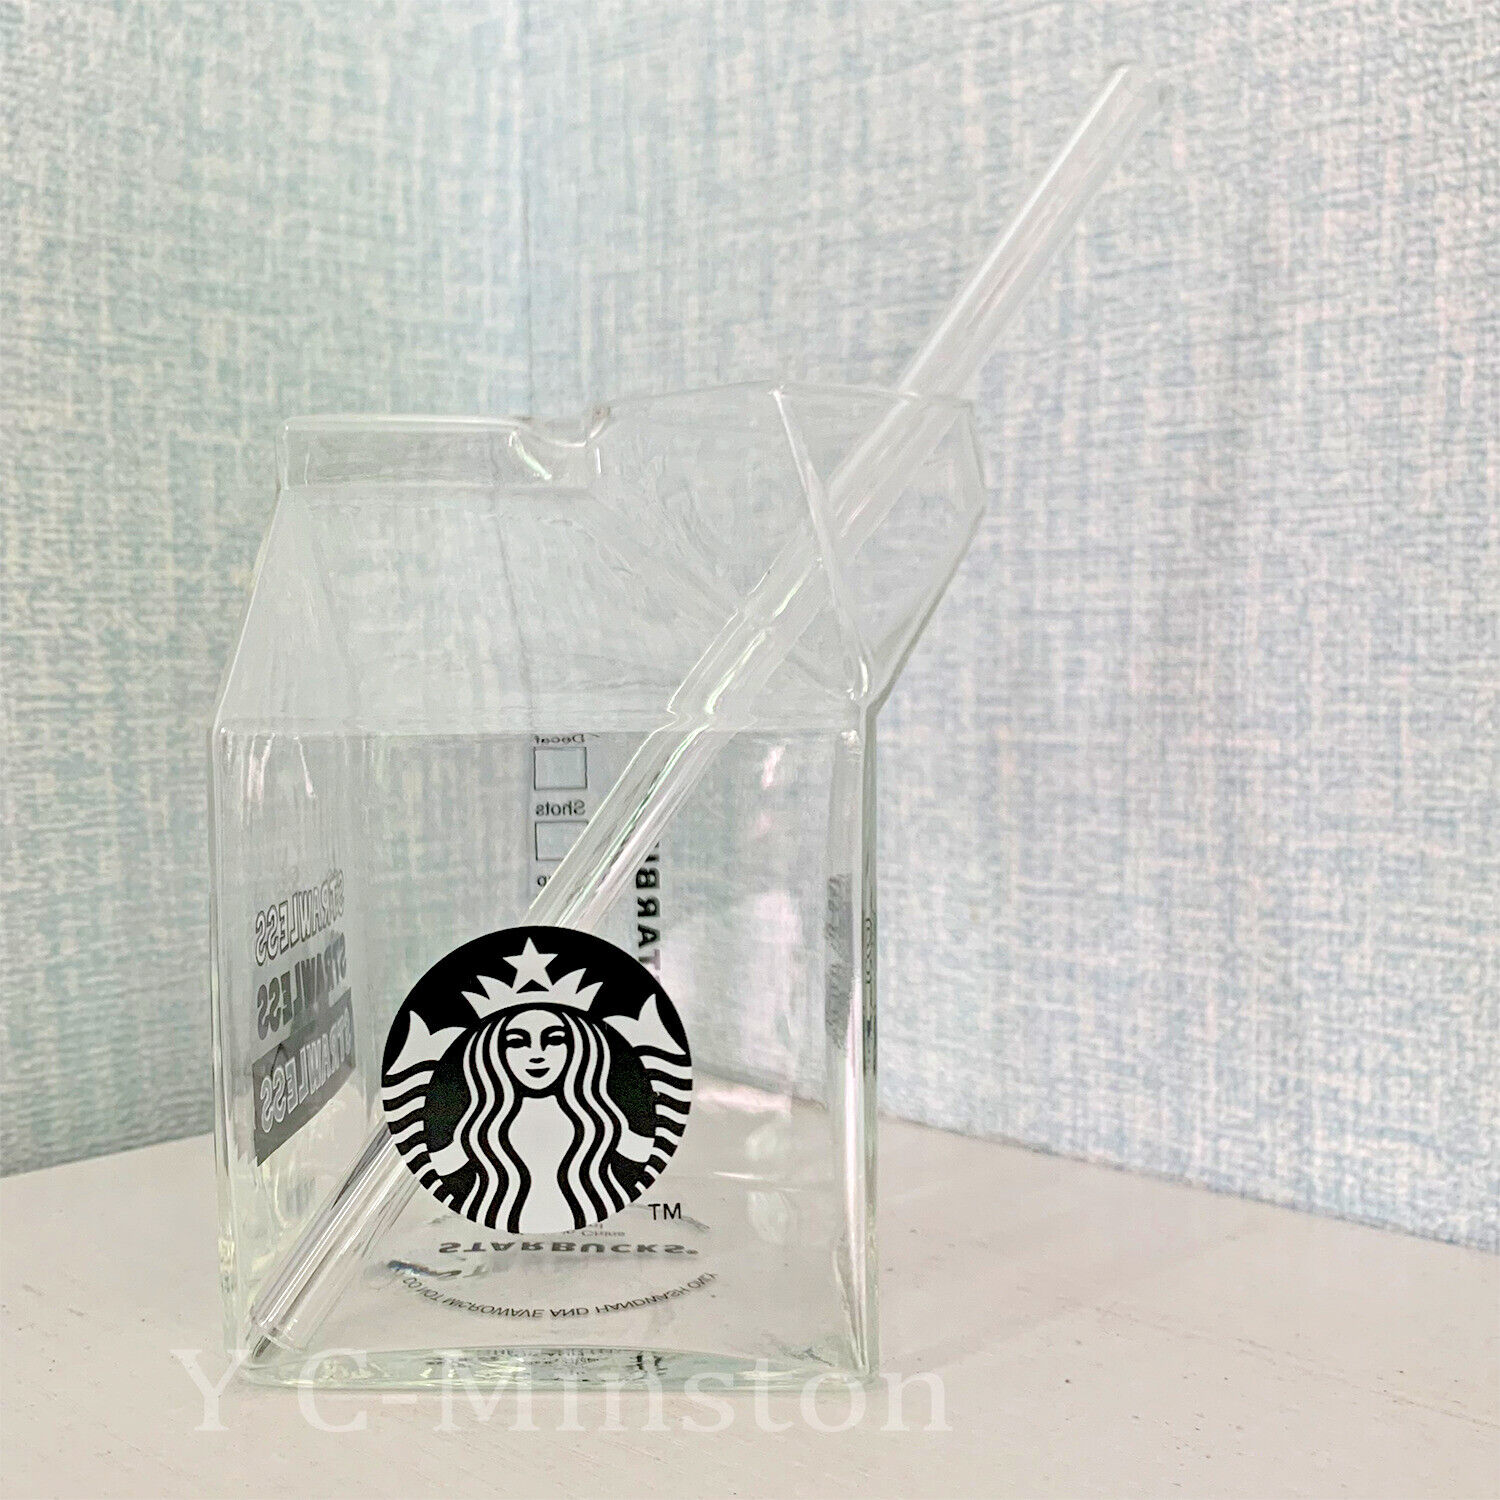 New Starbucks Milk Carton Glass Coffee Mugs Cup+Straw 7.5oz/12oz Limited Edition